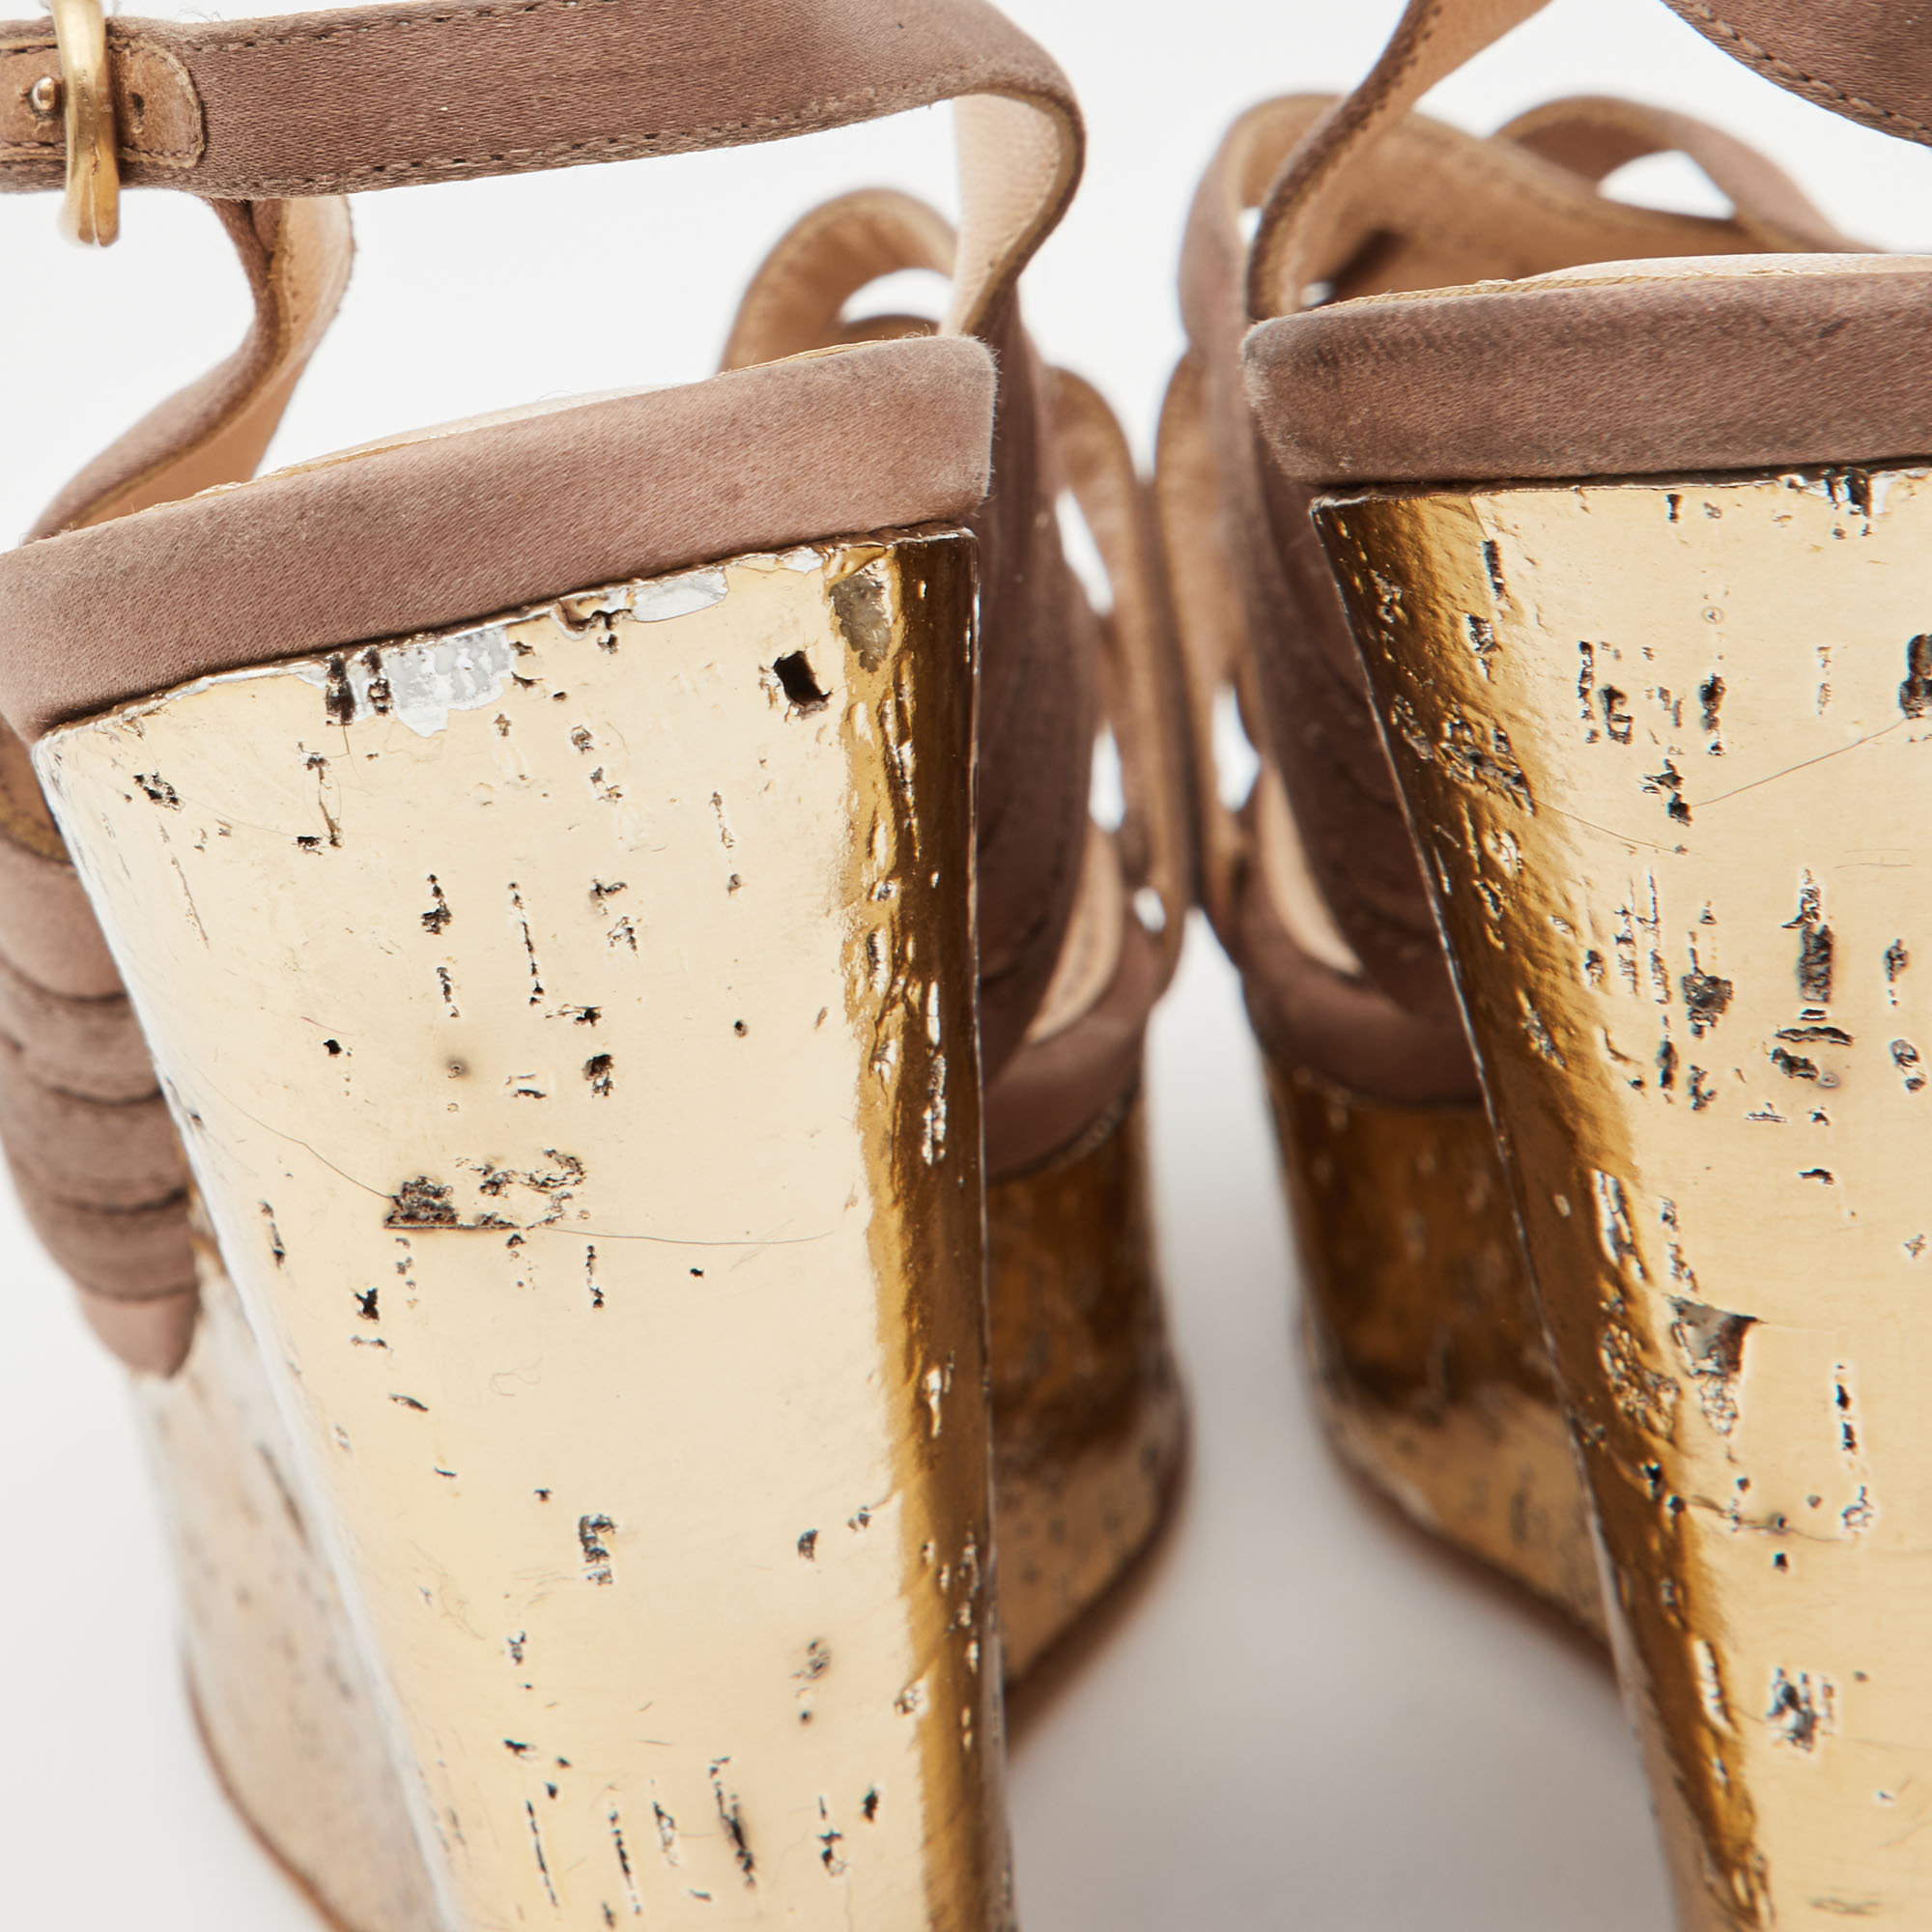 Yves Saint Laurent Brown Satin Wedge Sandals Size 35